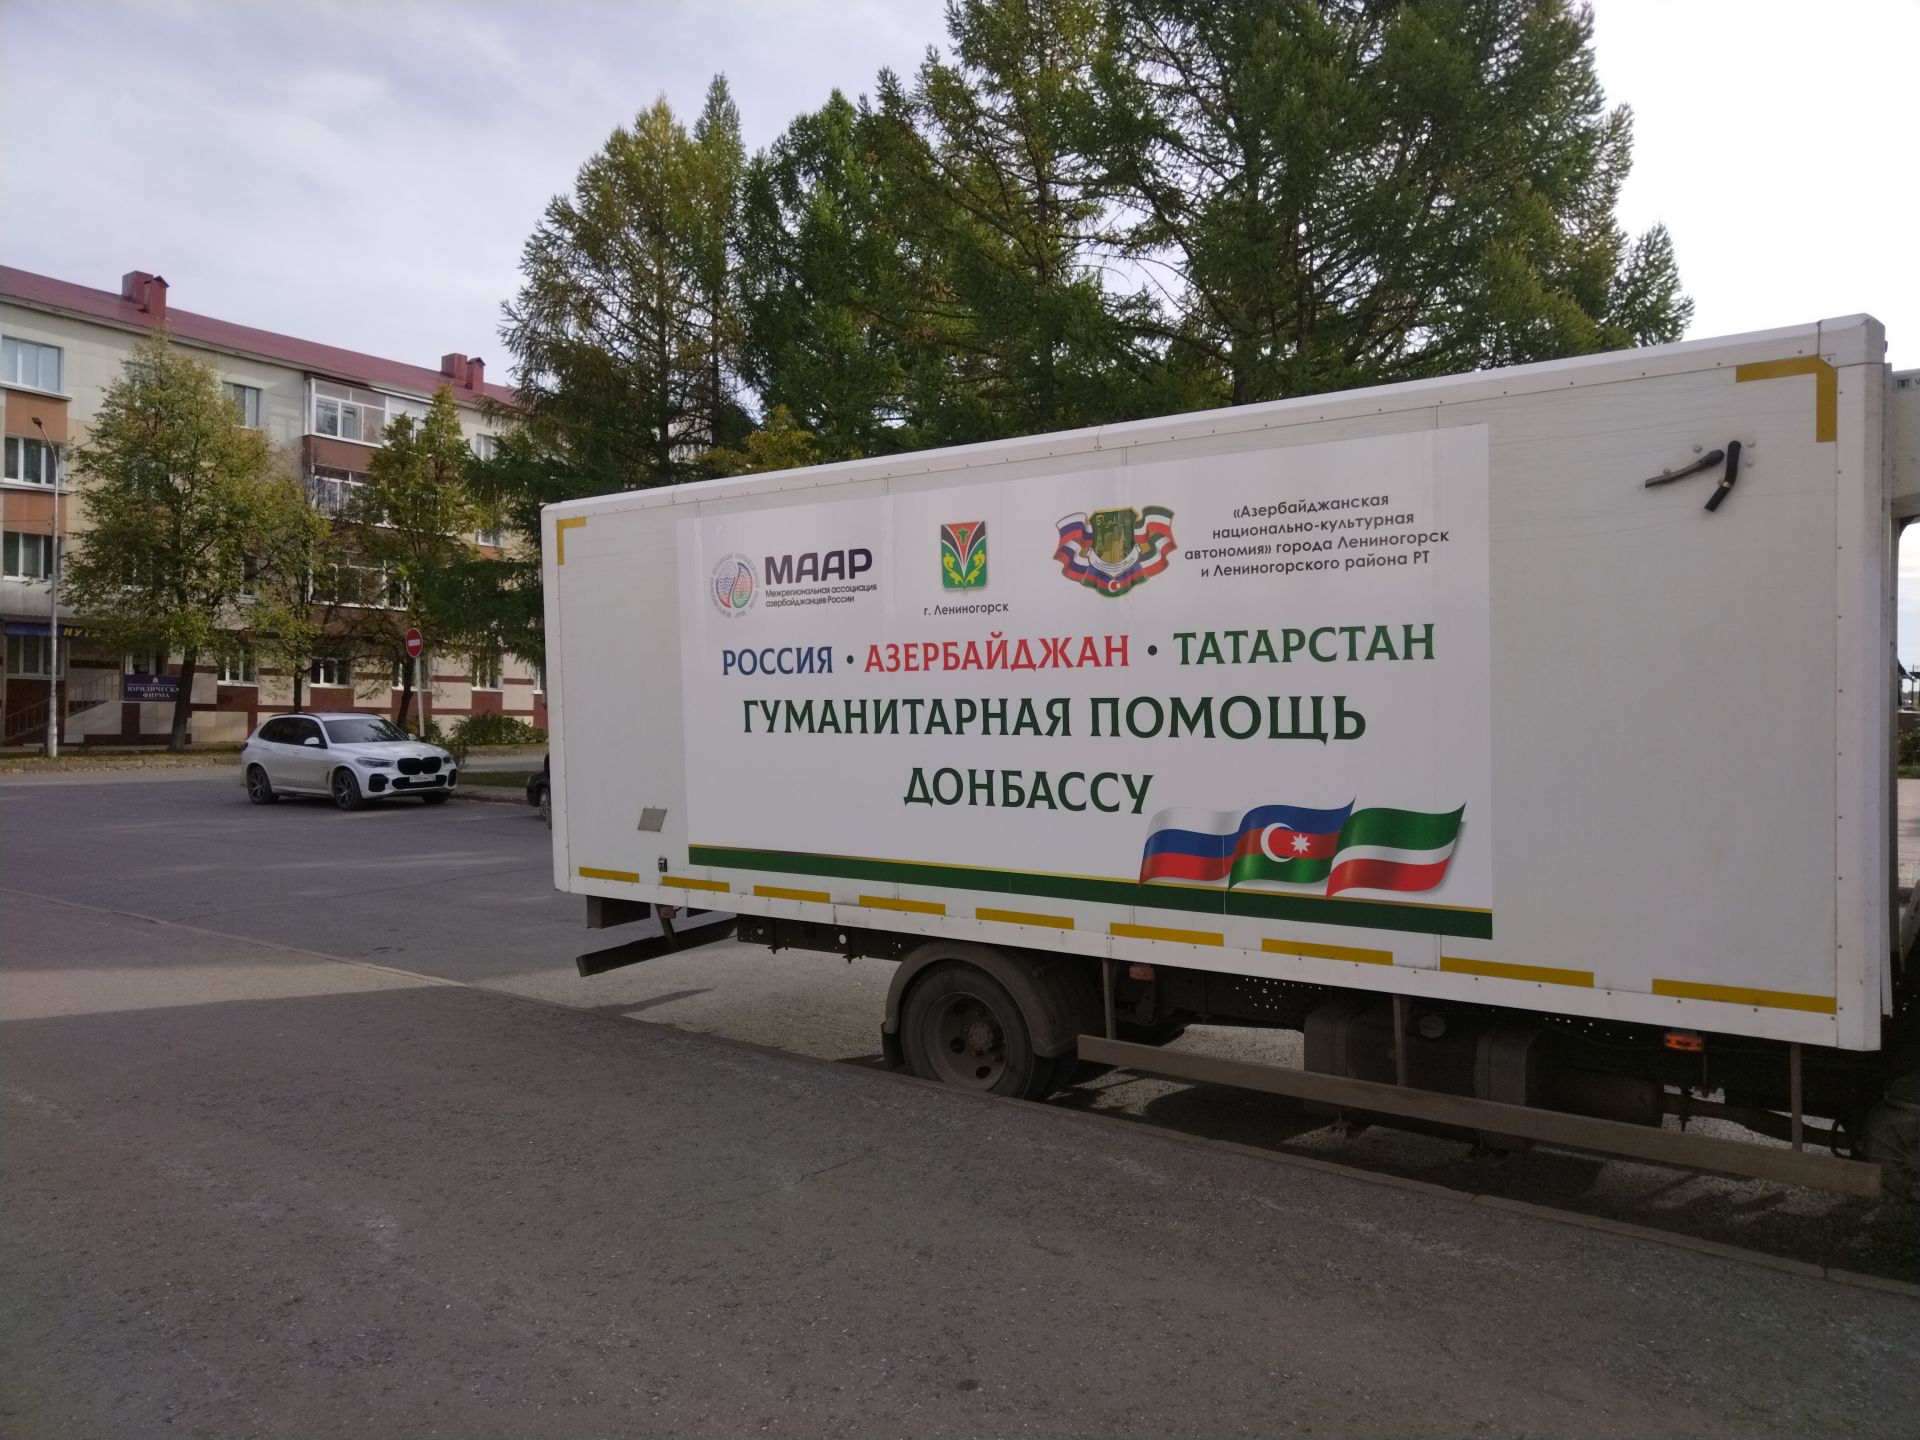 Лениногорскидан Донбасска гуманитар ярдәм жибәрелде (фотолар)